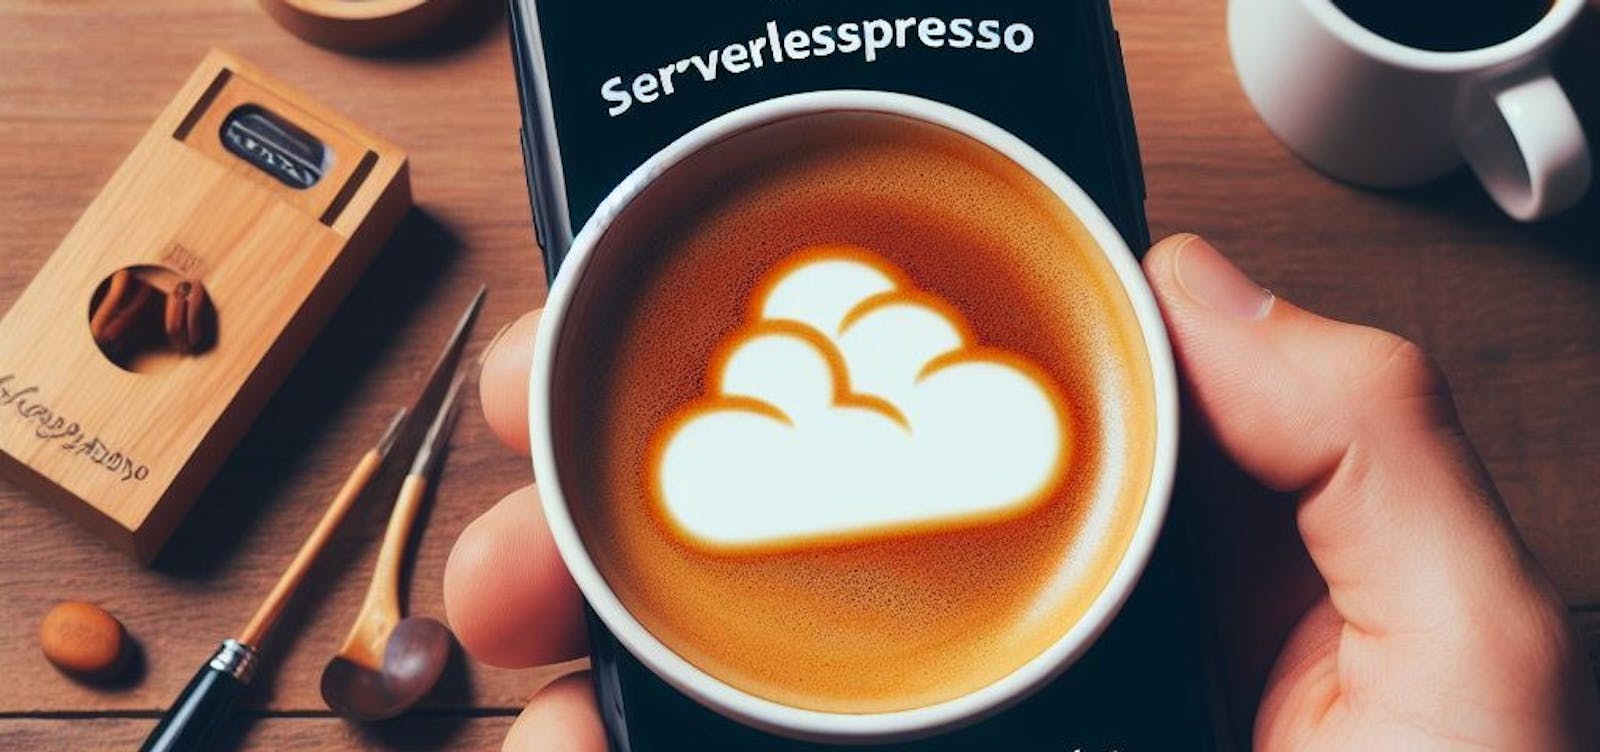 Building Serverlesspresso 3